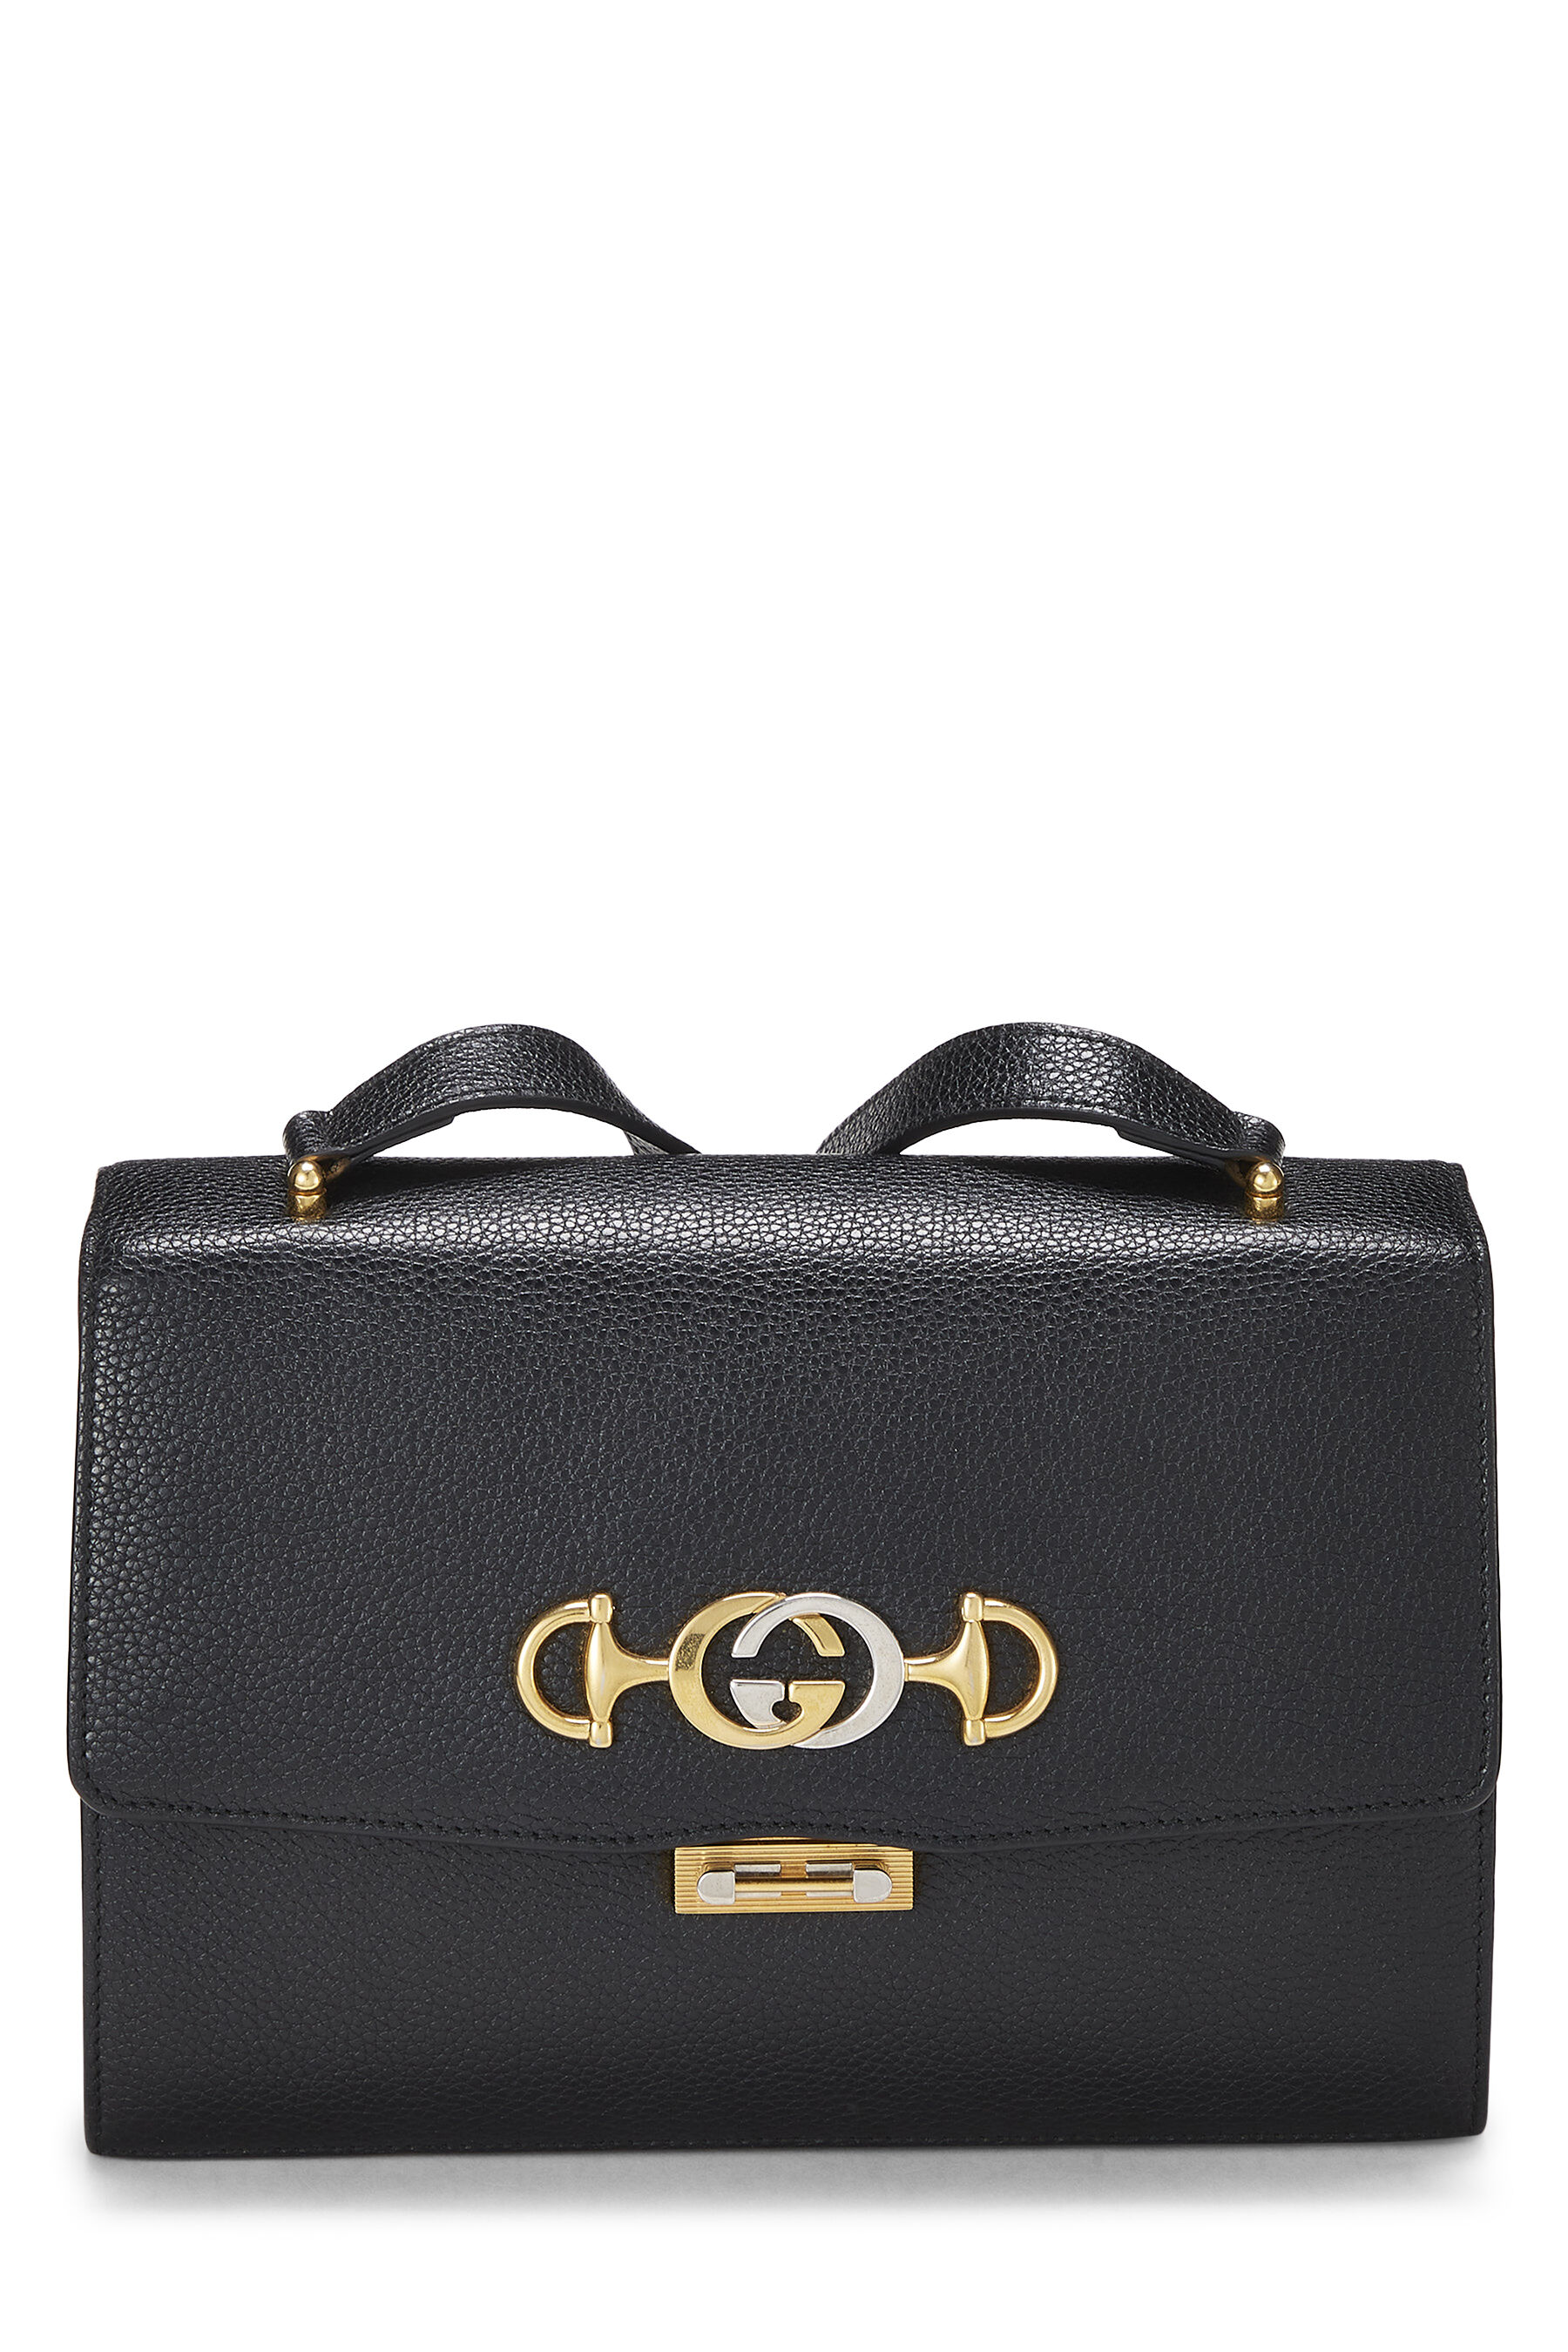 Gucci Black Leather Zumi Shoulder Bag Small